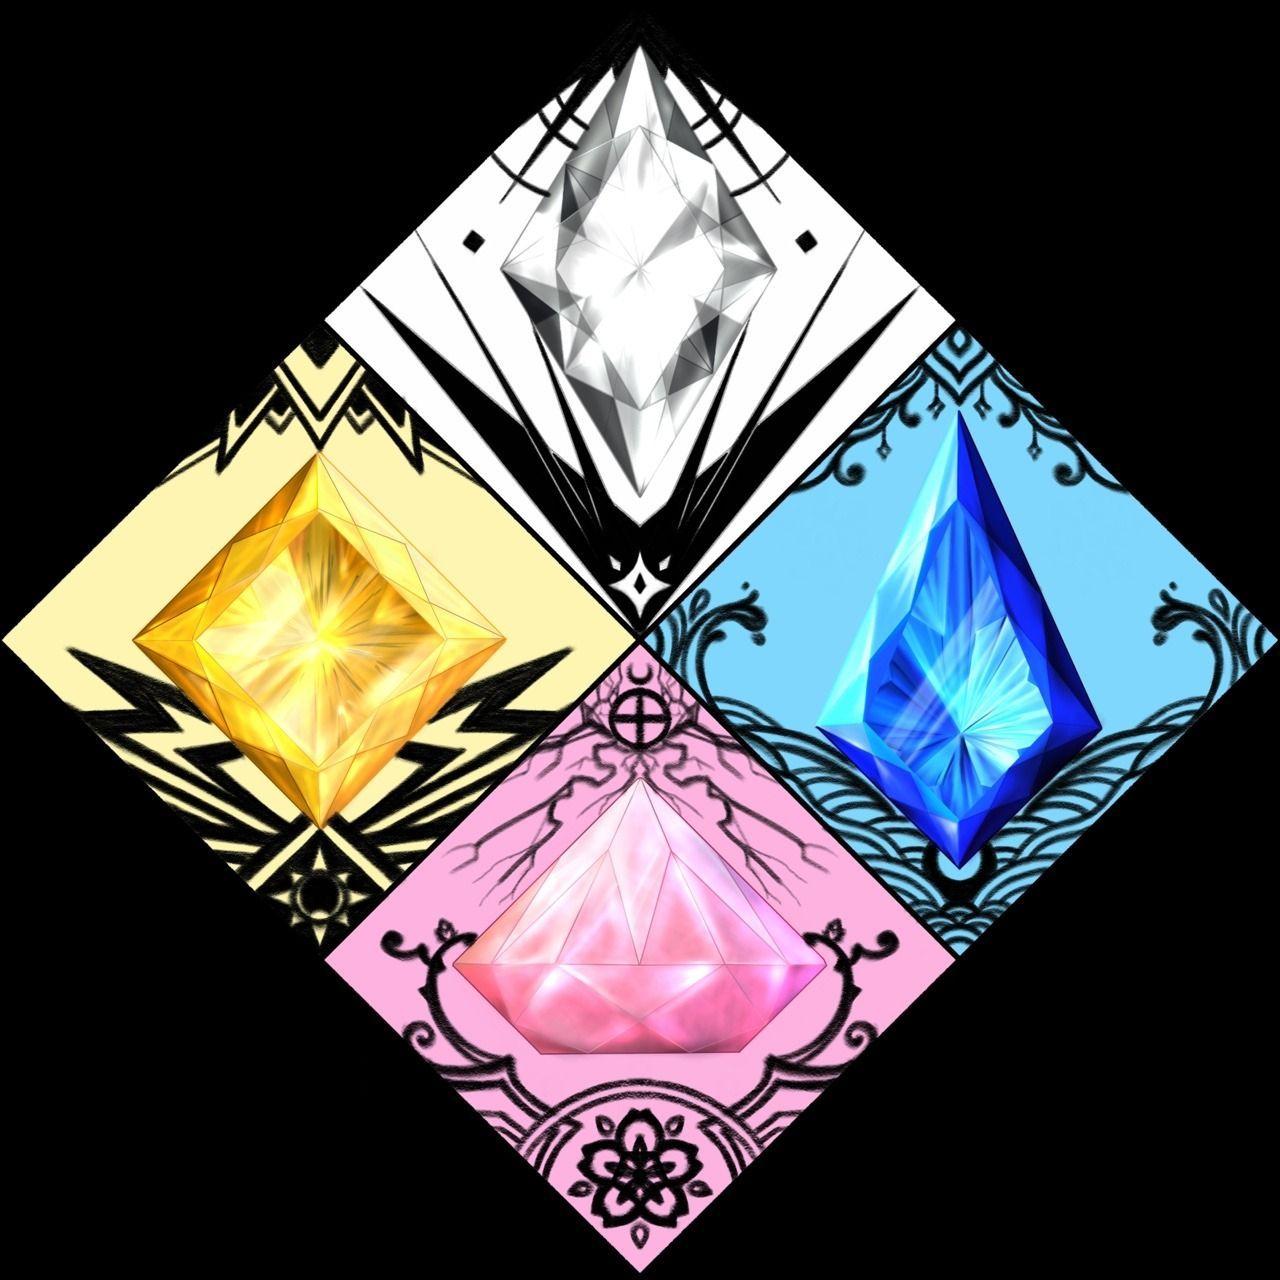 Steven Universe Diamonds Logo - The Diamond Authority emblem. Infinity. Diamond